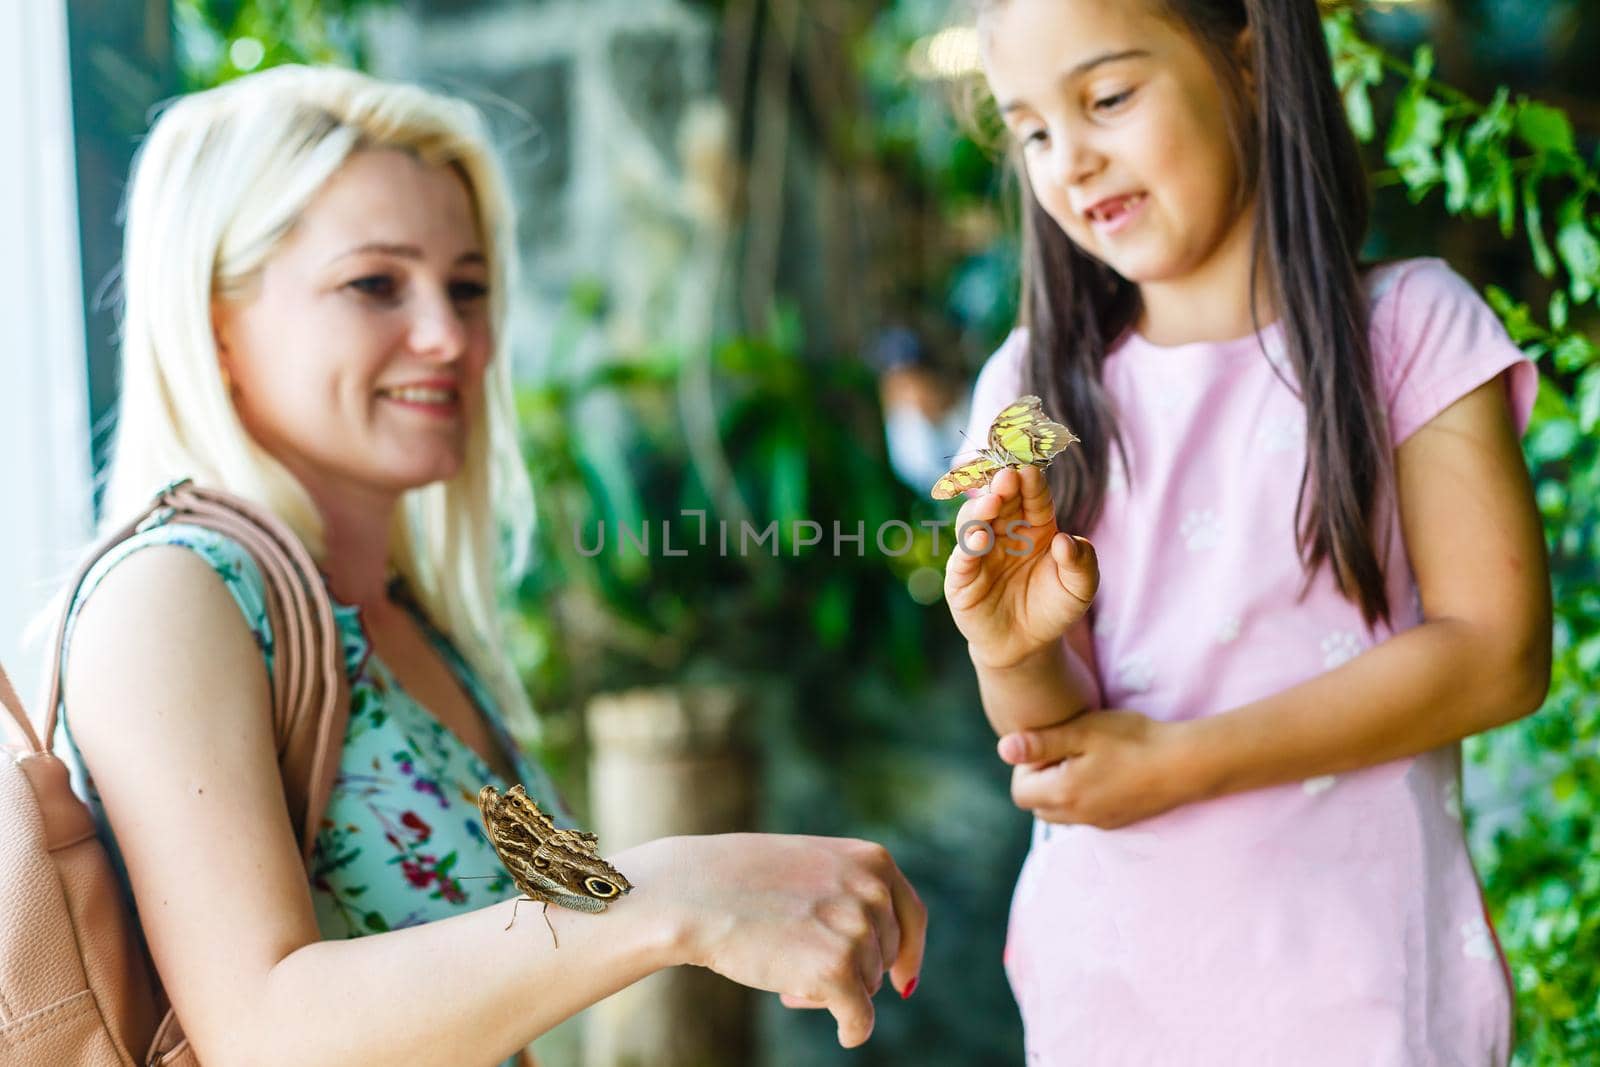 Little girl holding a butterfly in a field by Andelov13